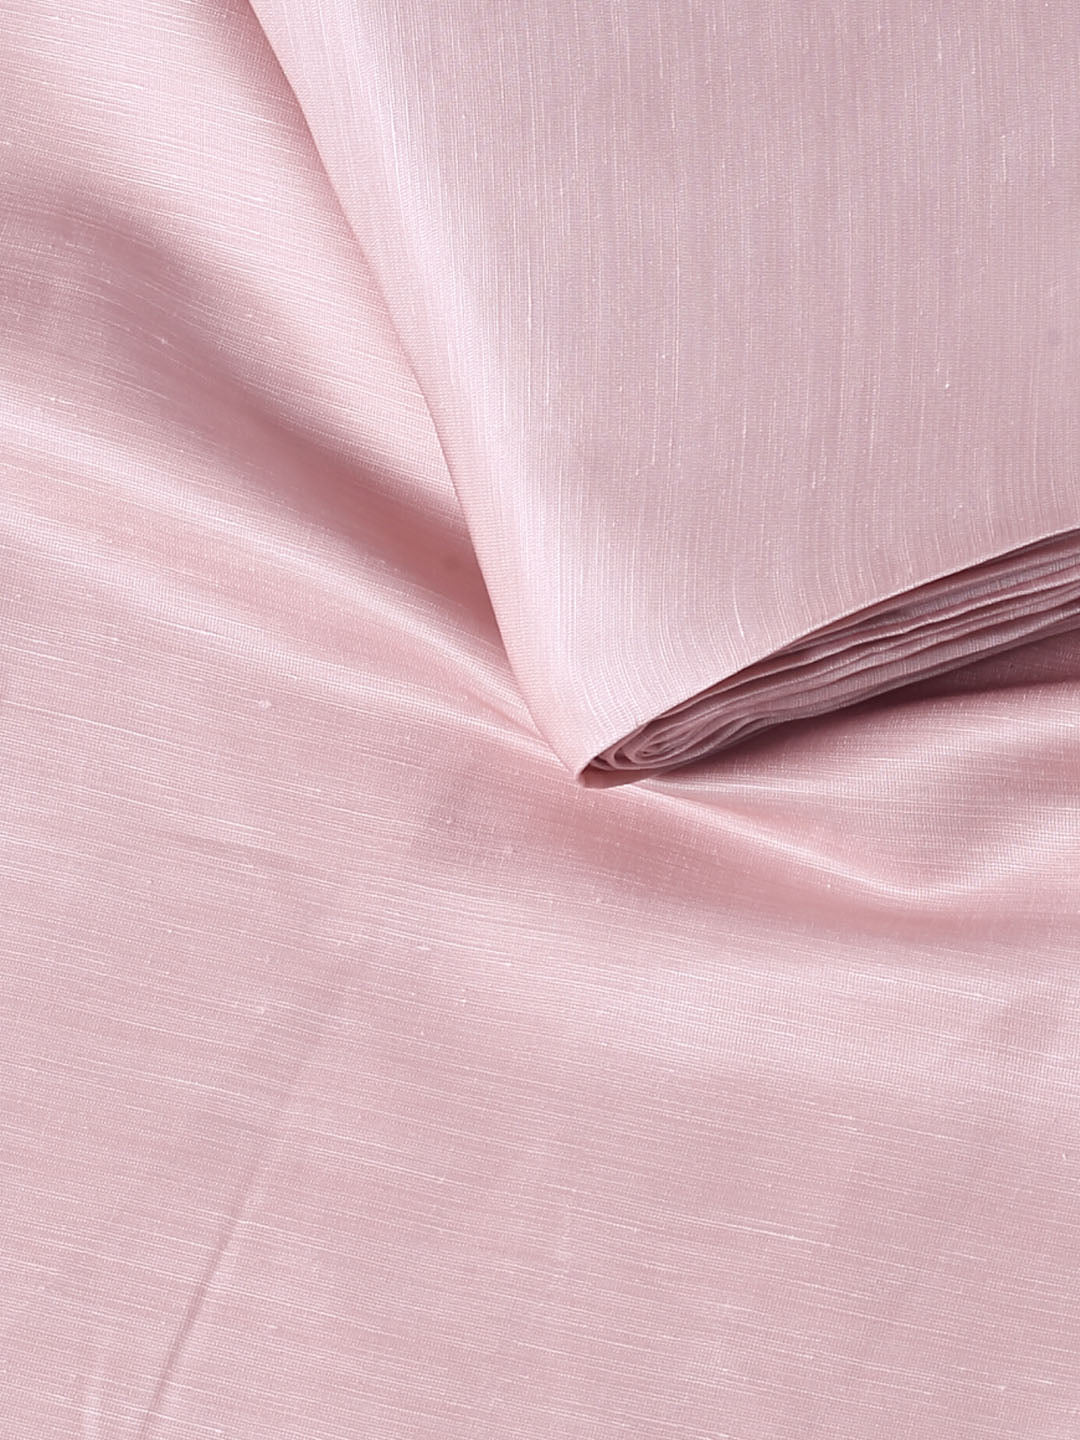 Blush Pink Linen Satin Fabric